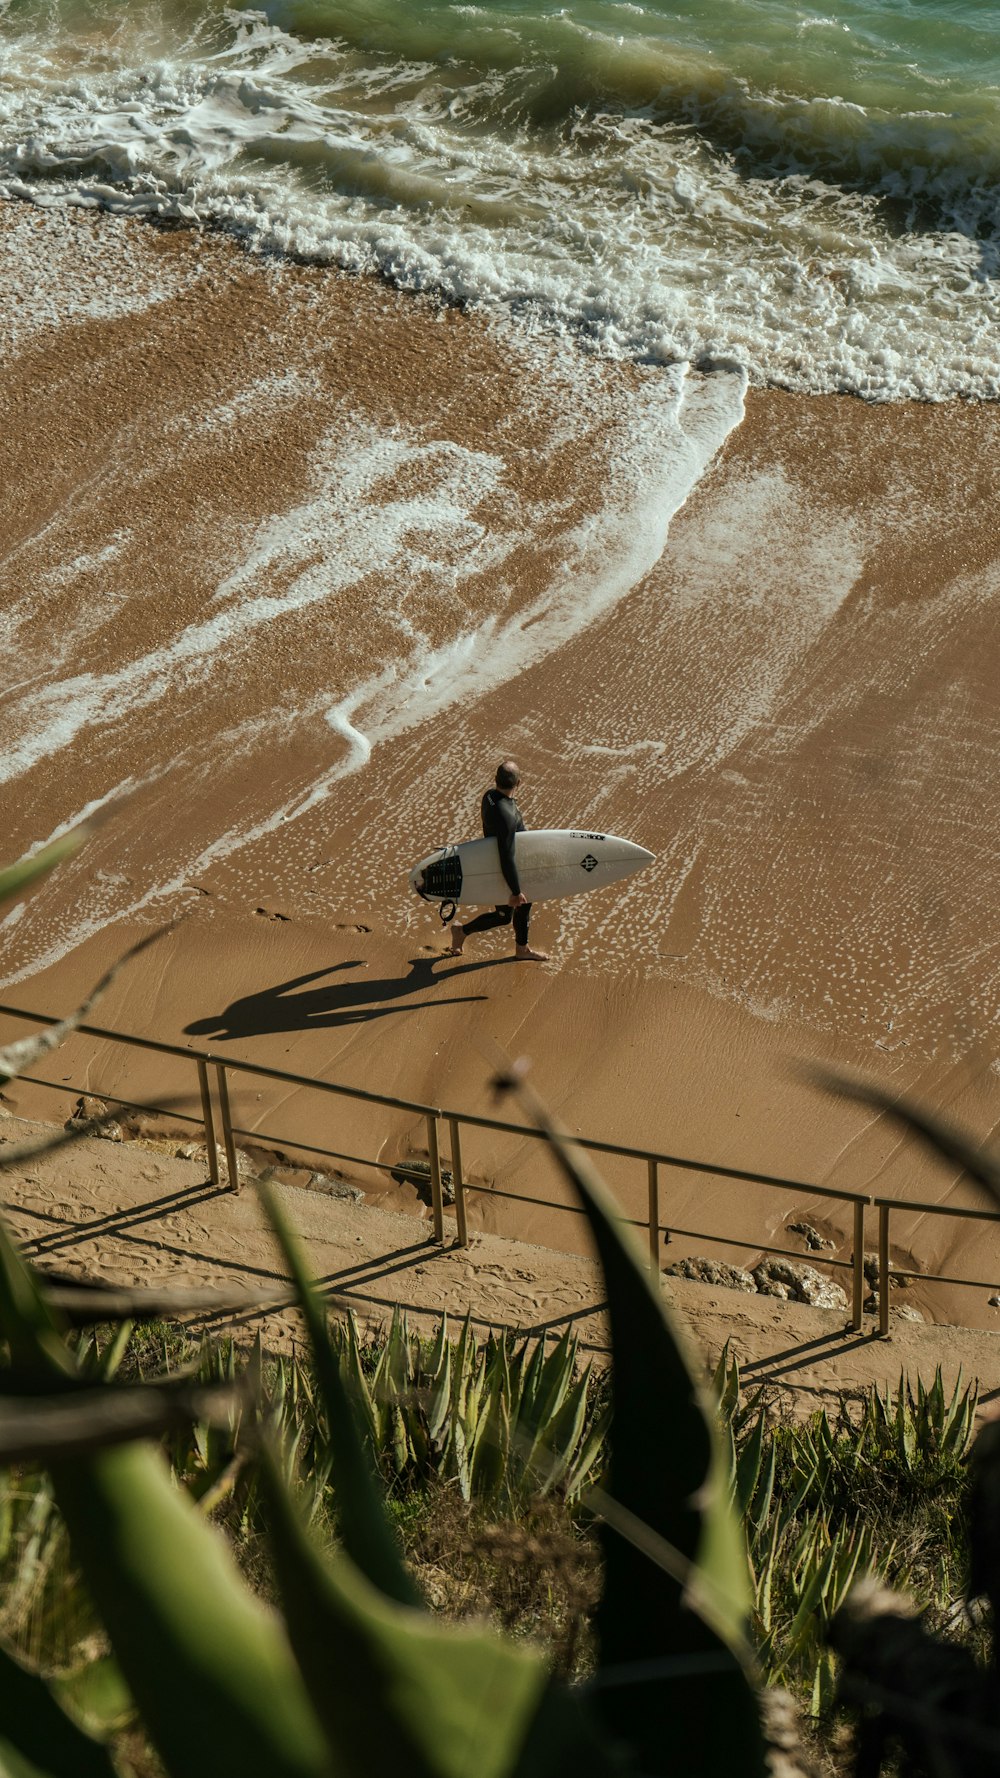 a man carrying a surfboard on top of a sandy beach